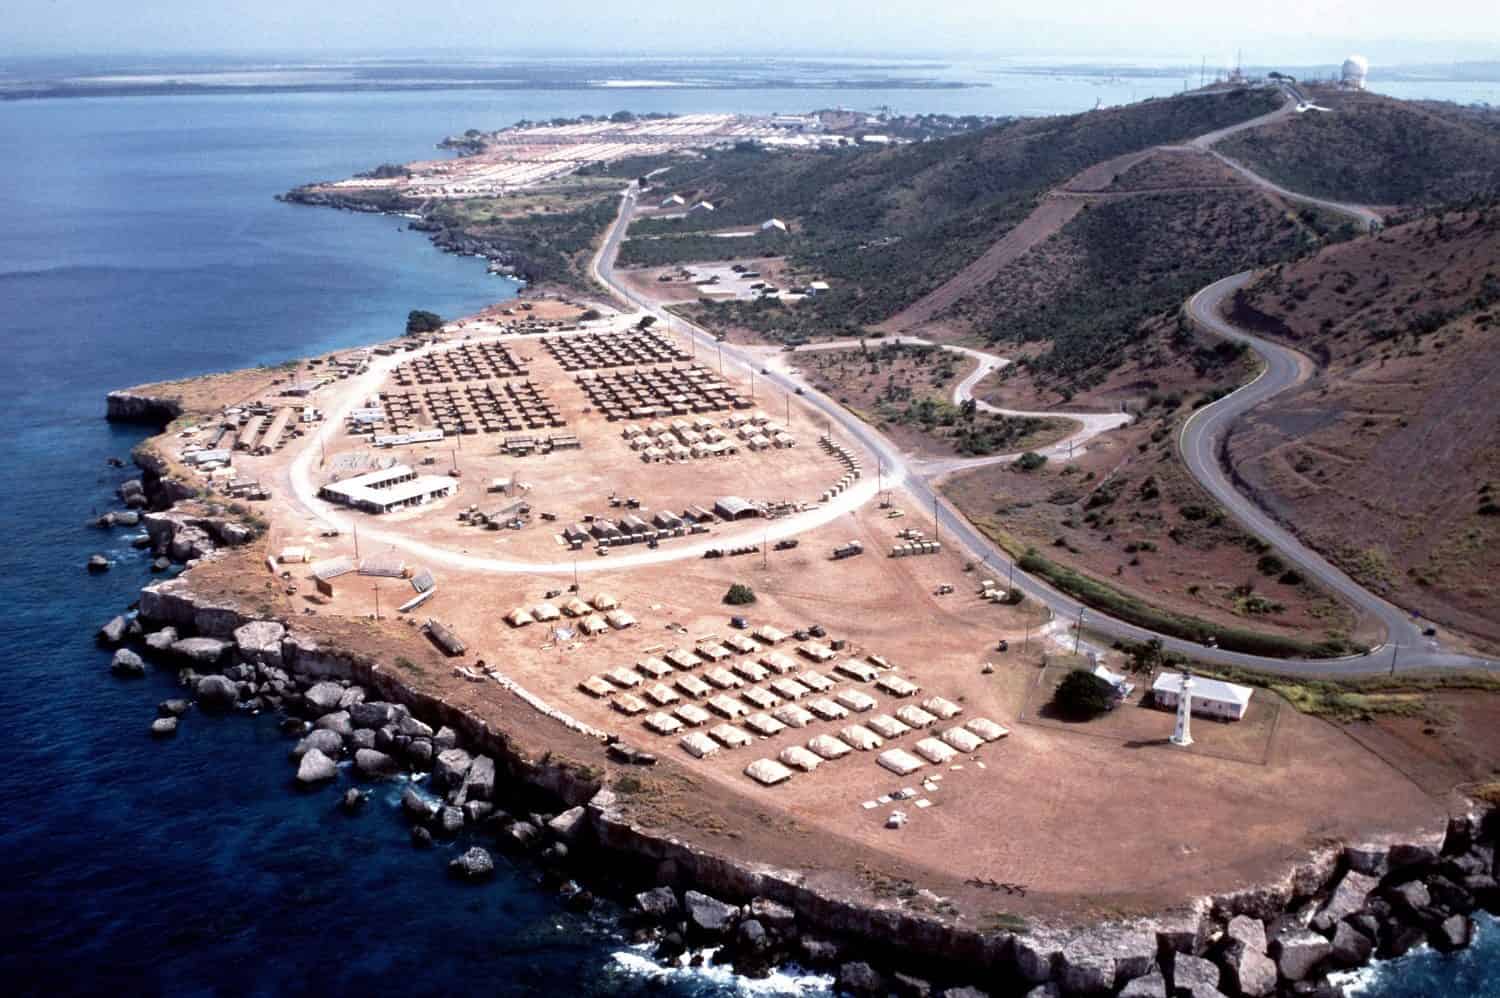 Aerial view of the U.S. Naval Station Guantanamo Bay Cuba. Jul. 1 1994.